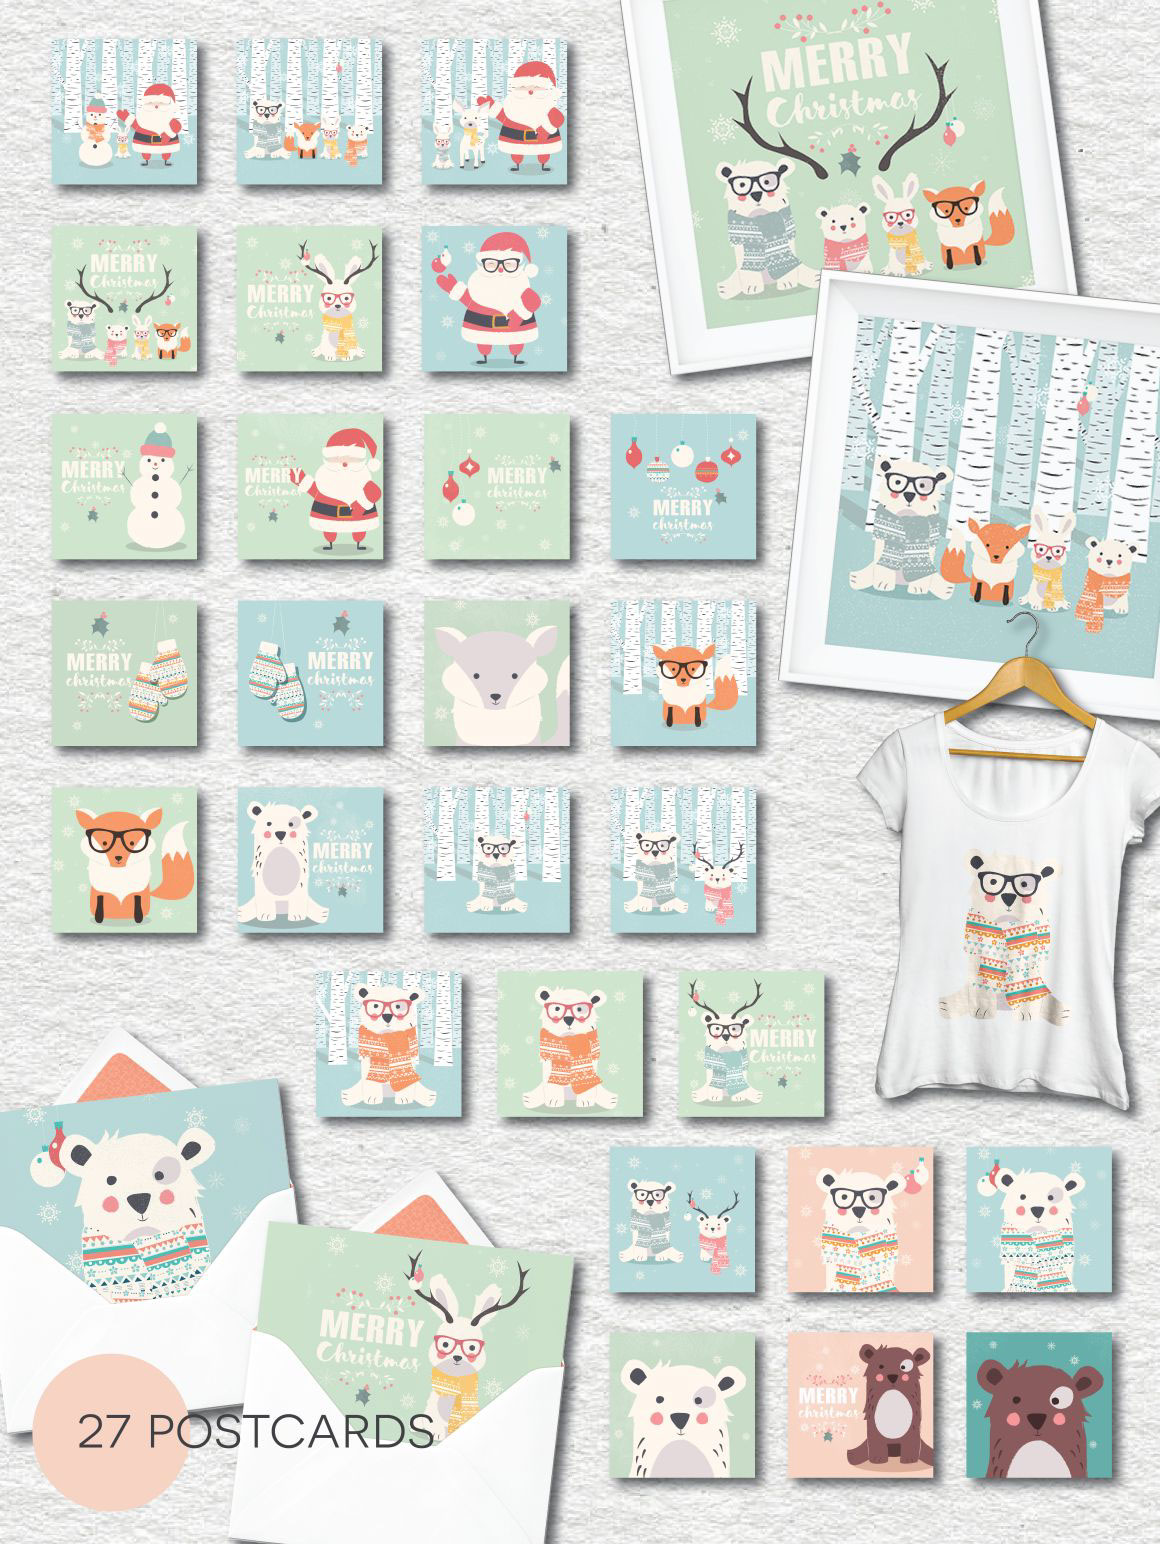 Christmas pattern animals bear cute vector seamless graphic ILLUSTRATION  Santa Claus